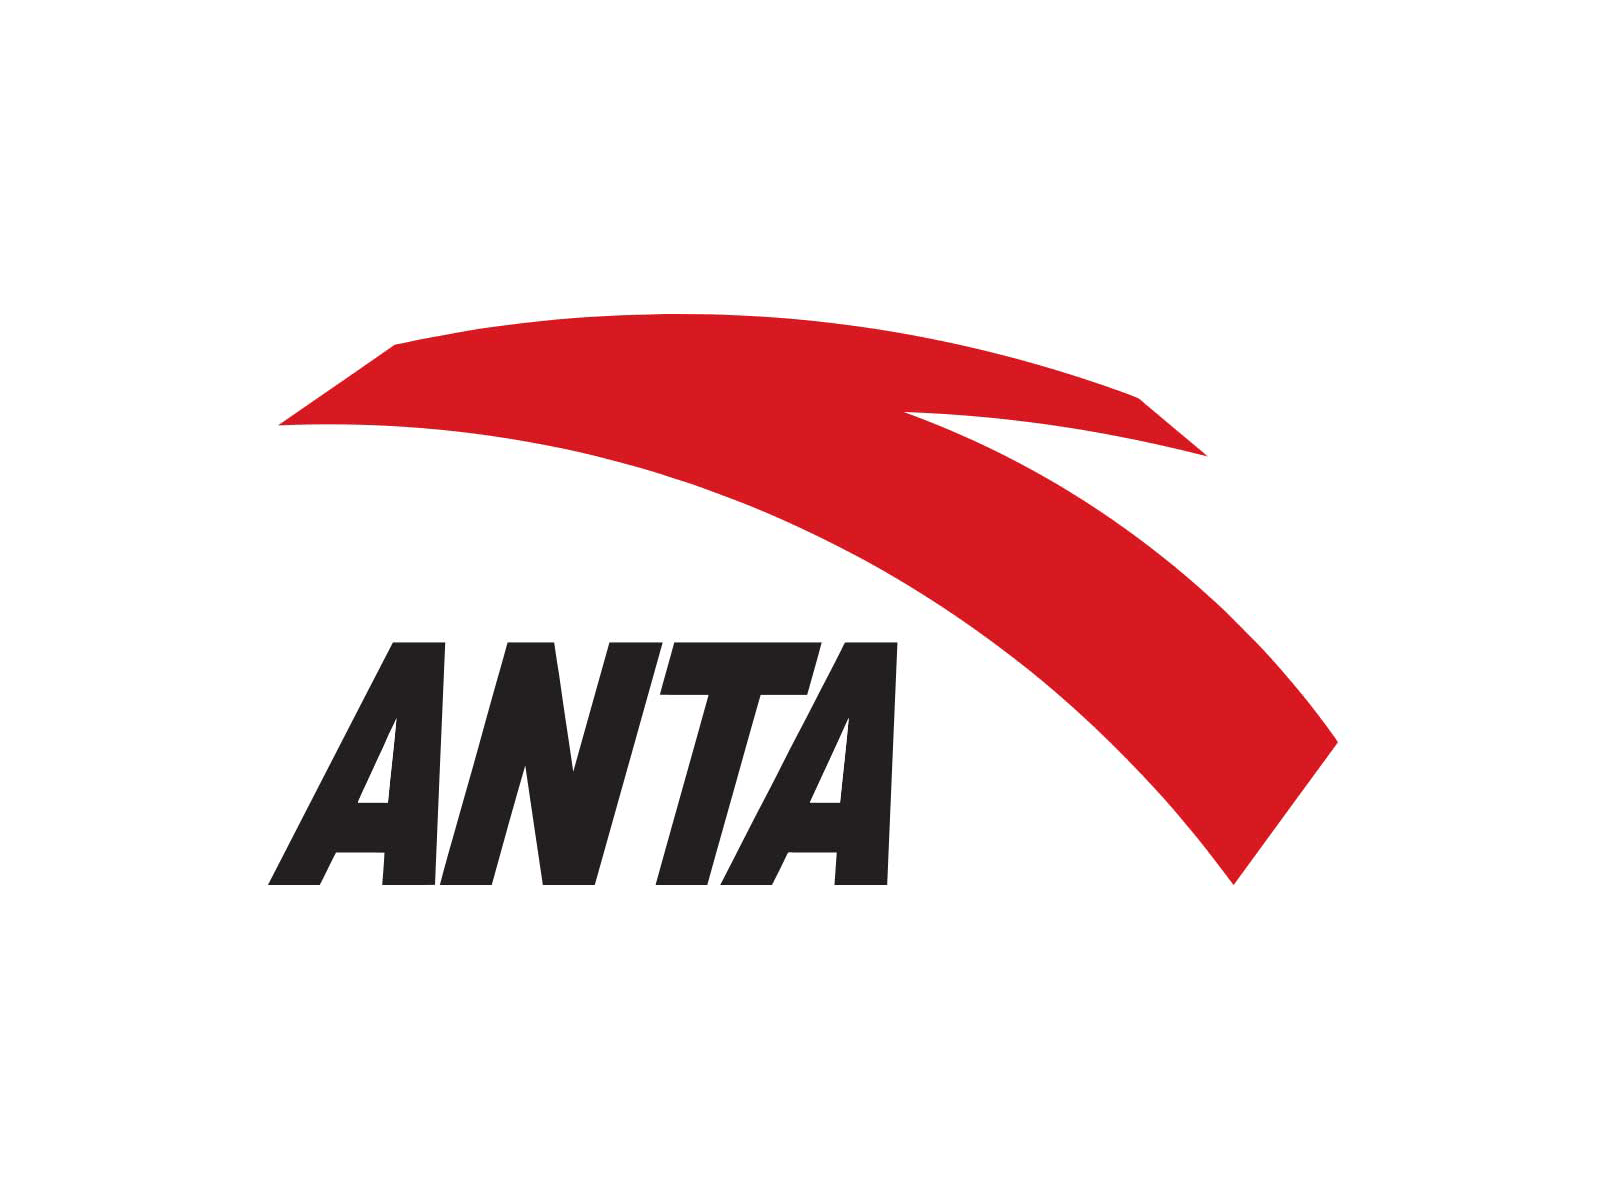 Anta Logo - ANTA logo and wordmark